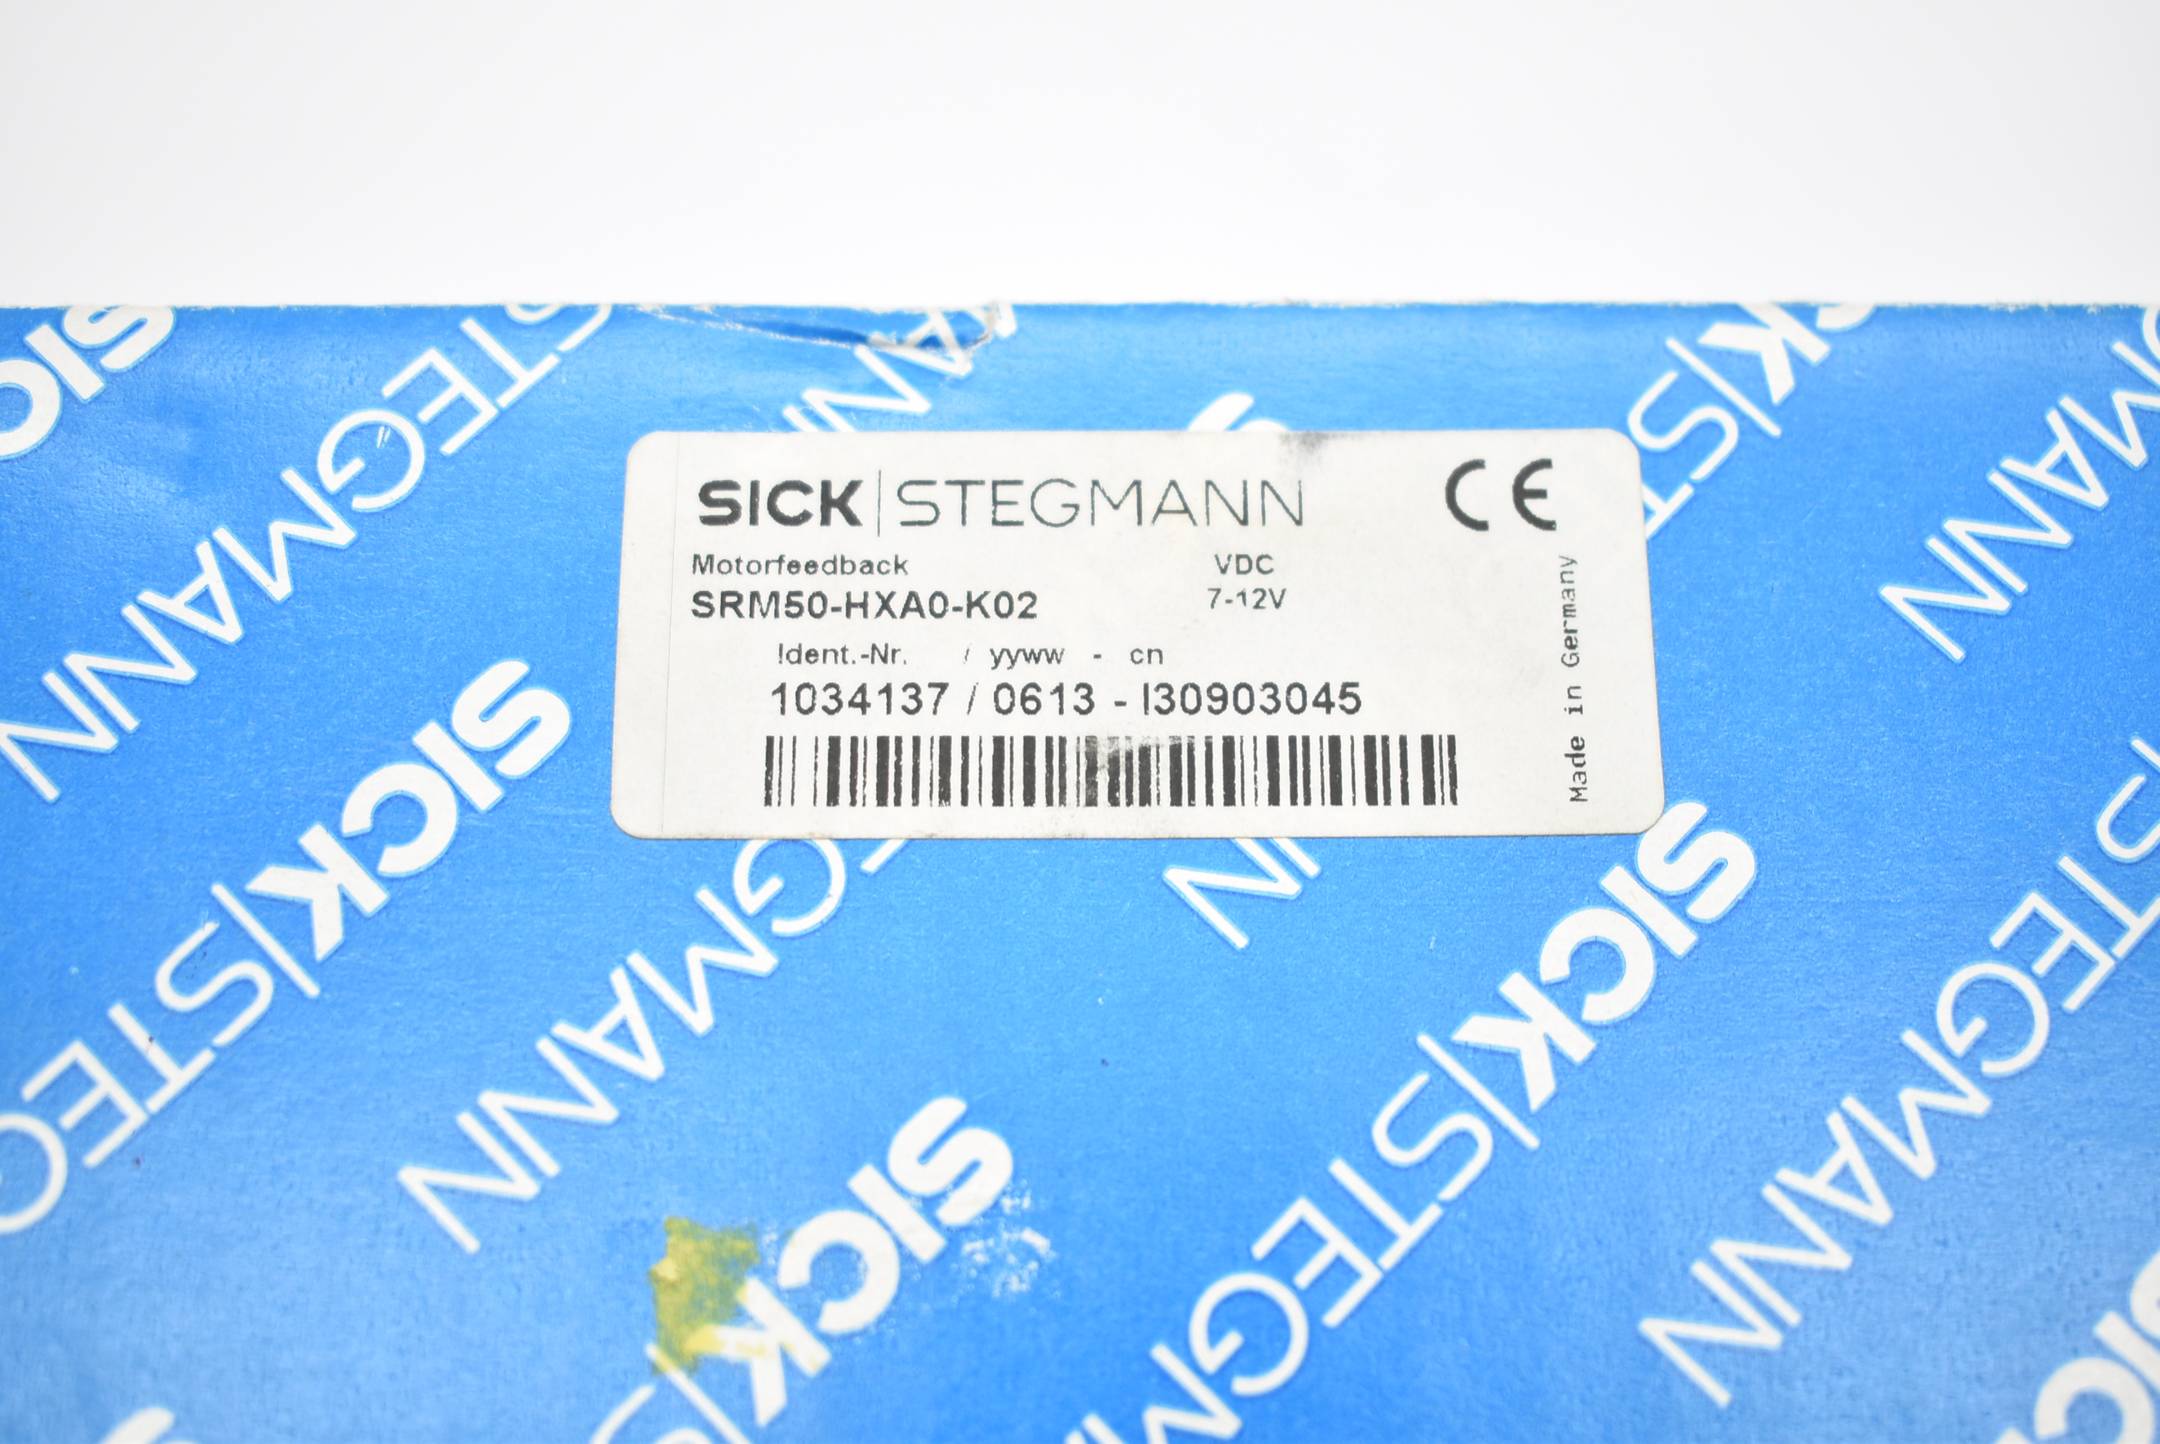 SICK Stegmann Motorfeedback SRM50-HXA0-K02 ( 1034137 )